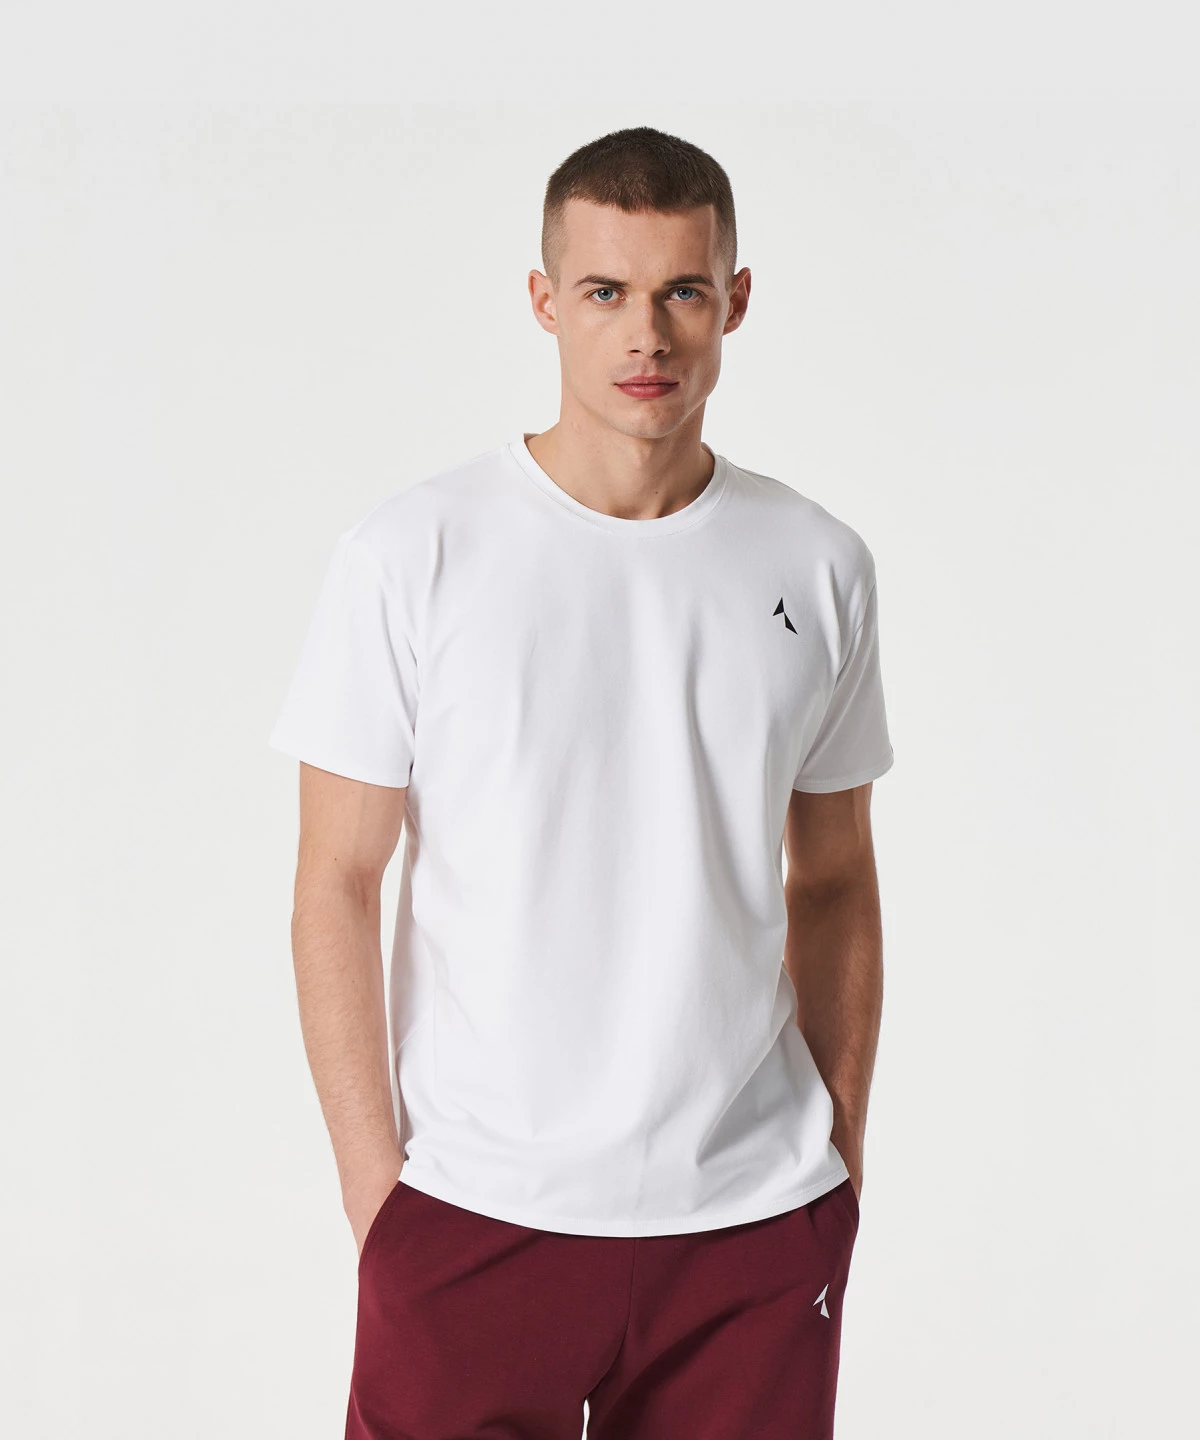 Men's White Delta Compression T-shirt - Carpatree